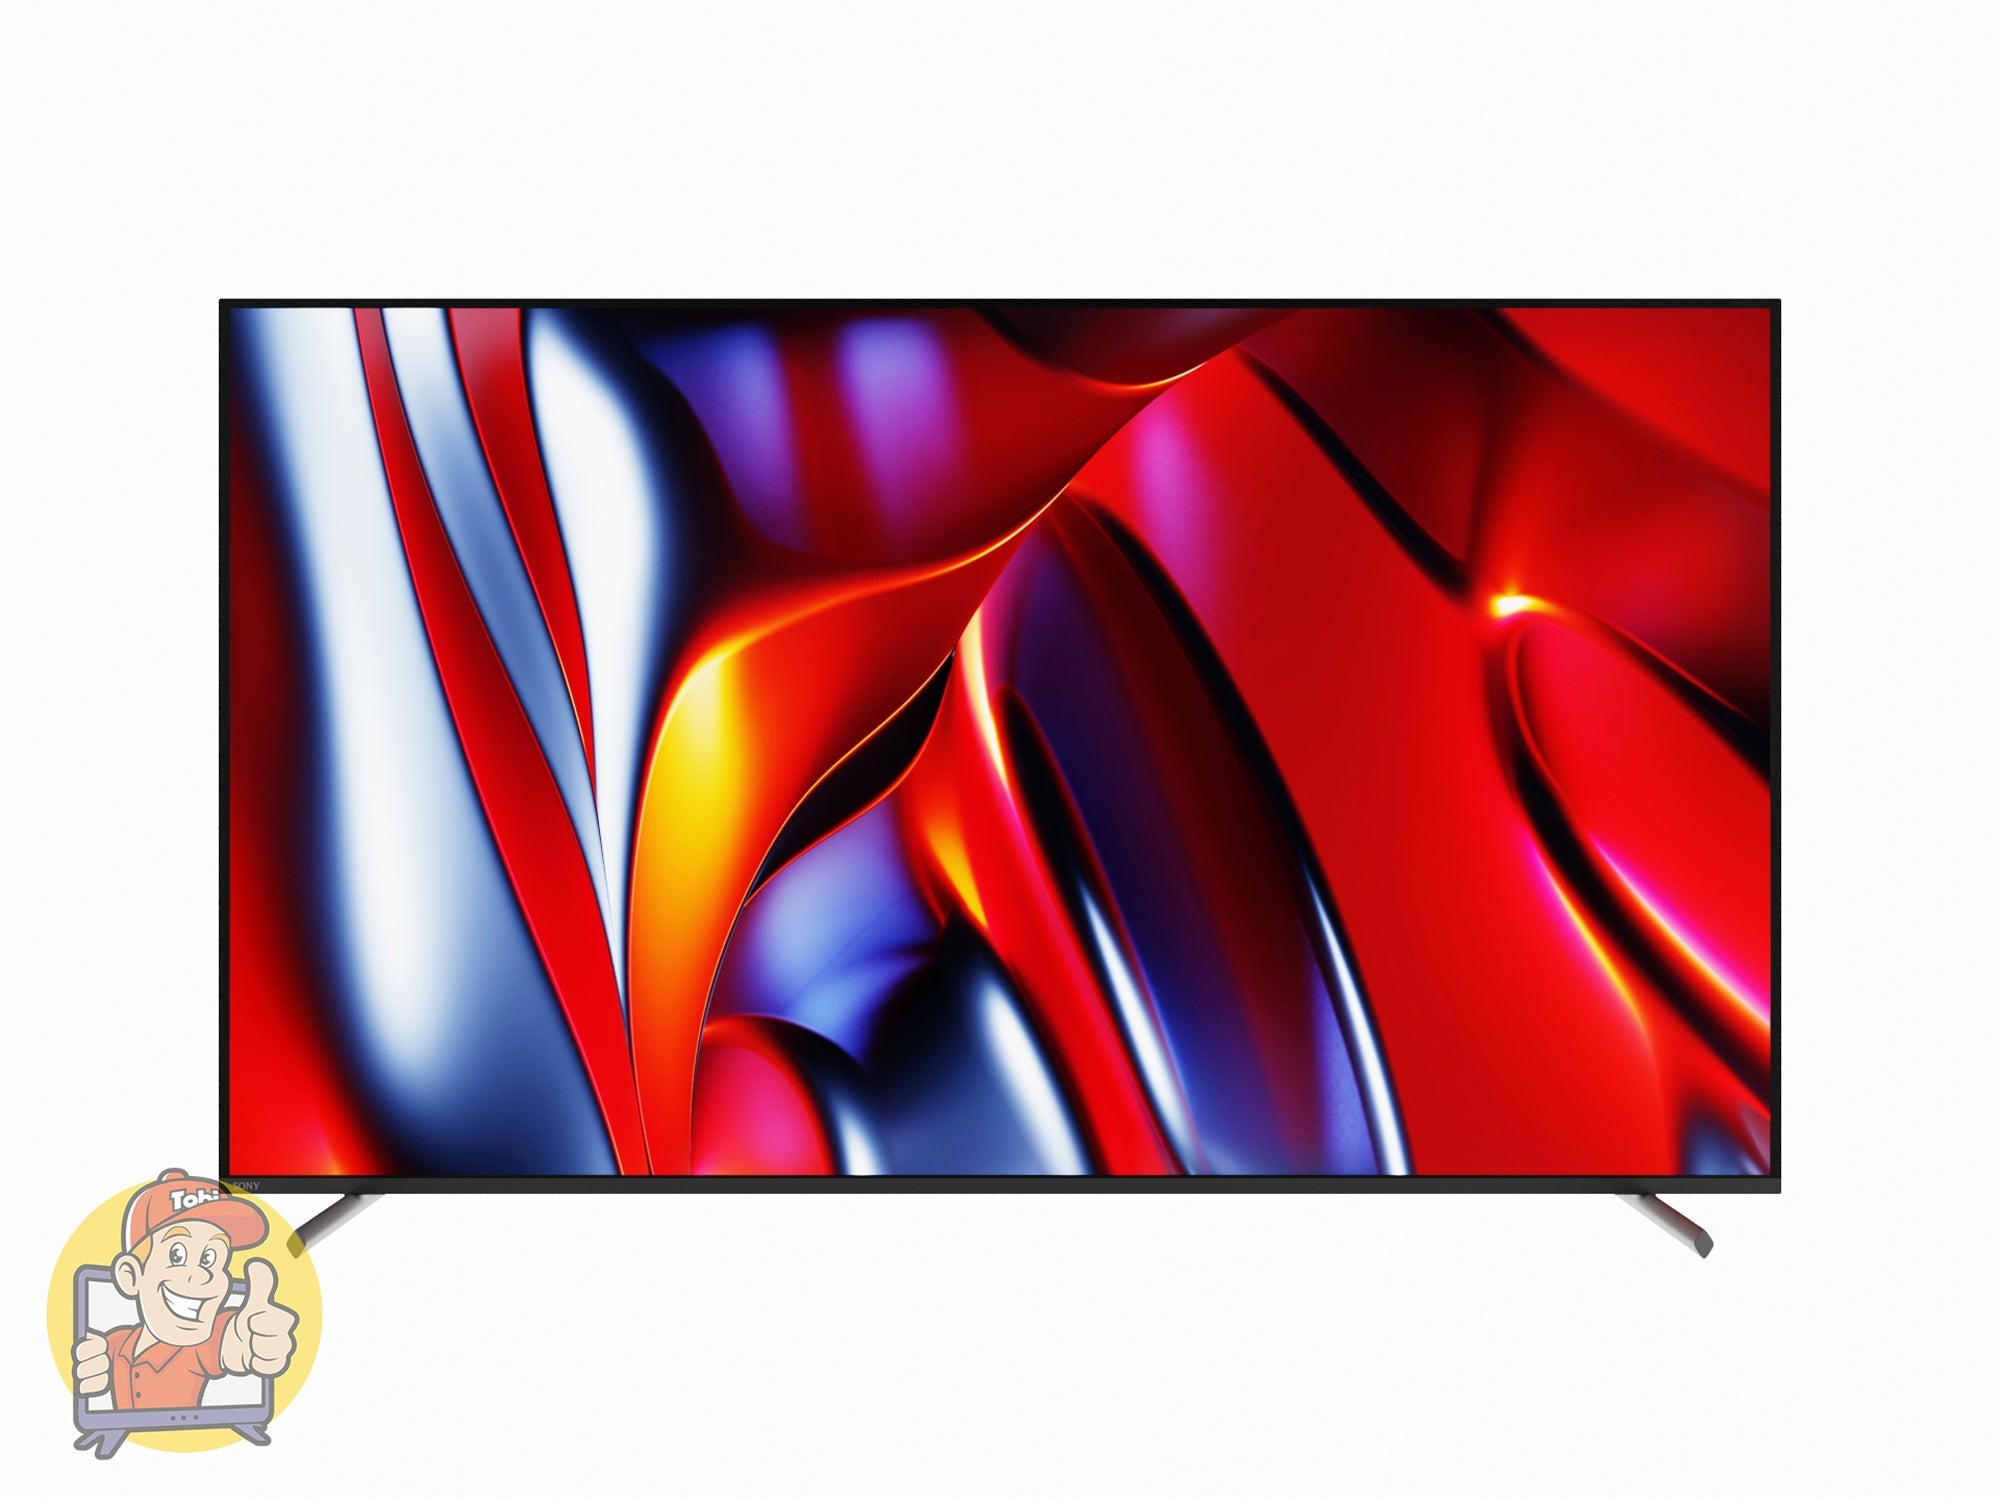 SONY BRAVIA XR-85X90L LED TV (Flat, 85 Zoll / 215 cm, UHD 4K, SMART TV, Google TV)